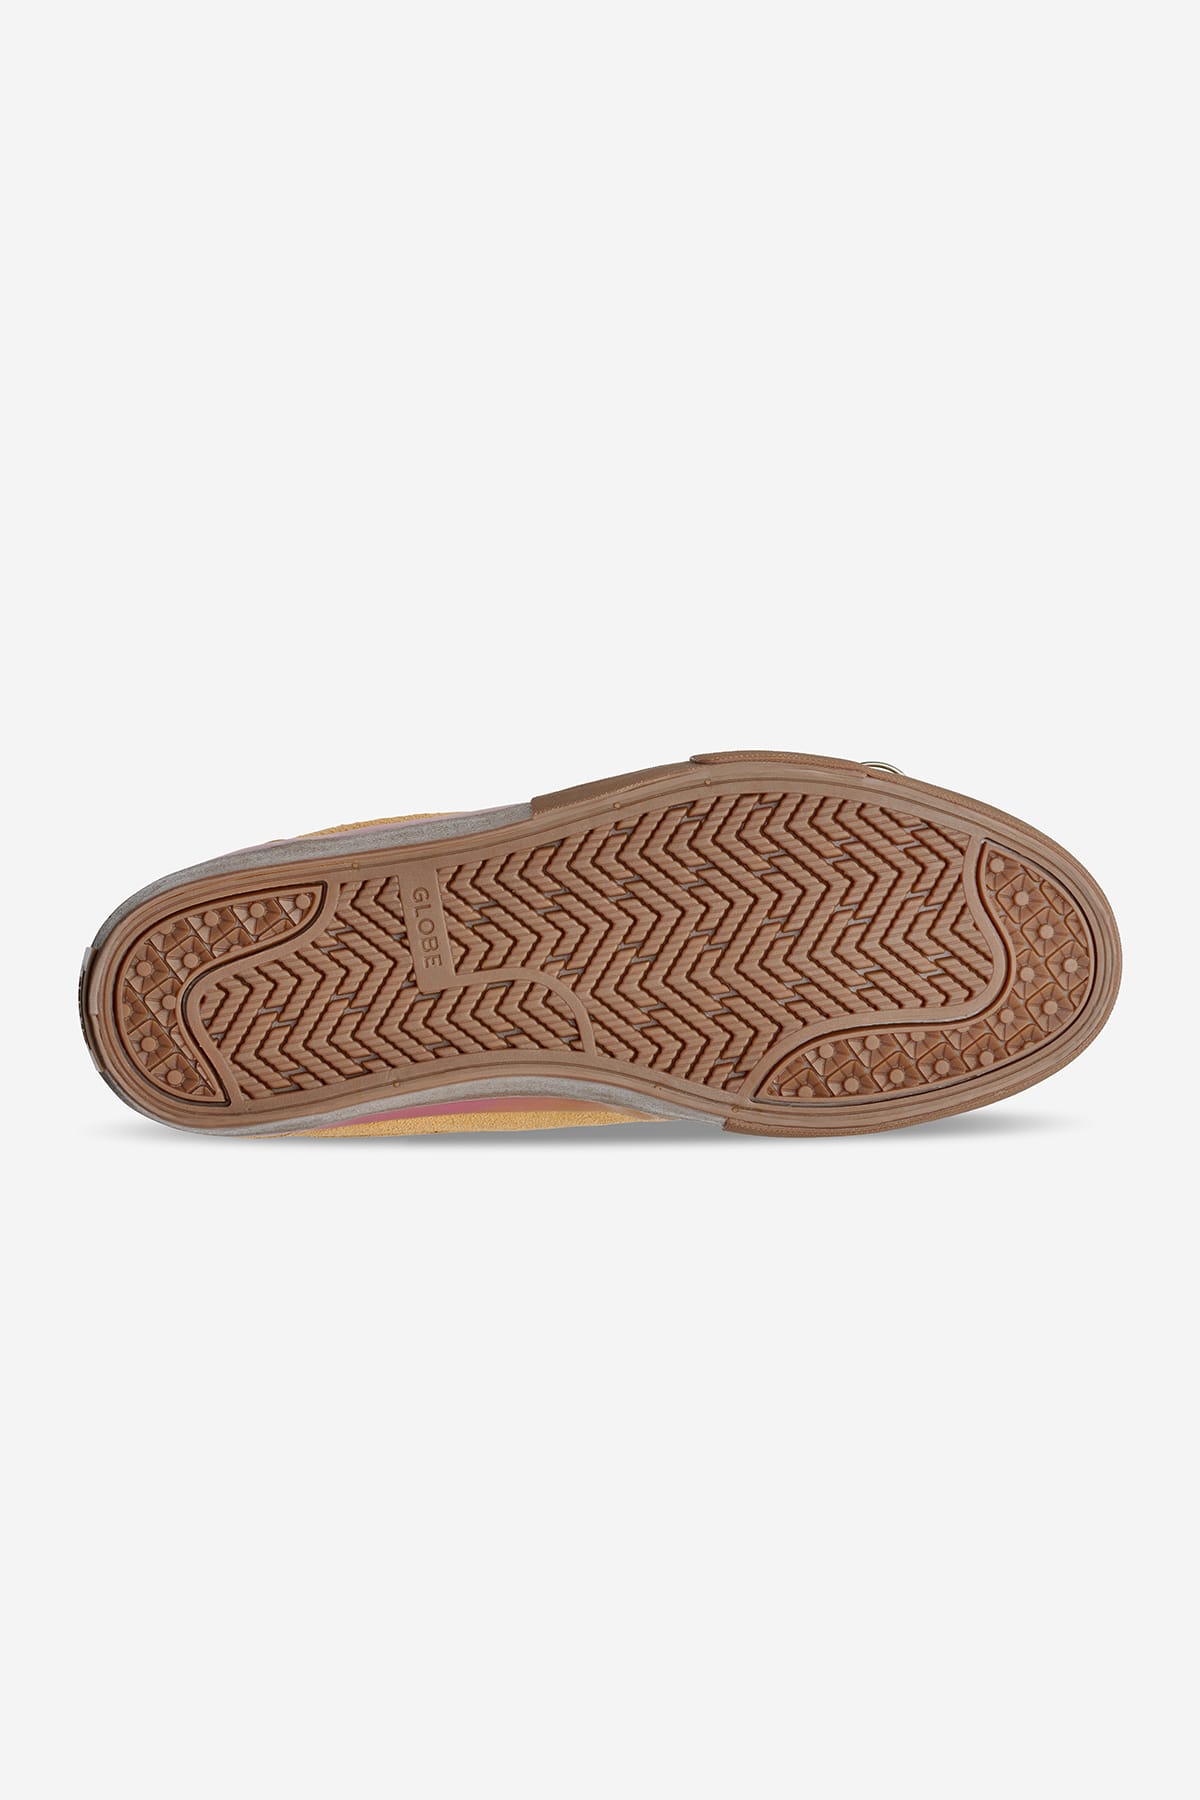 Globe - Mahalo Plus - Curry/Gum - skateboard Chaussures